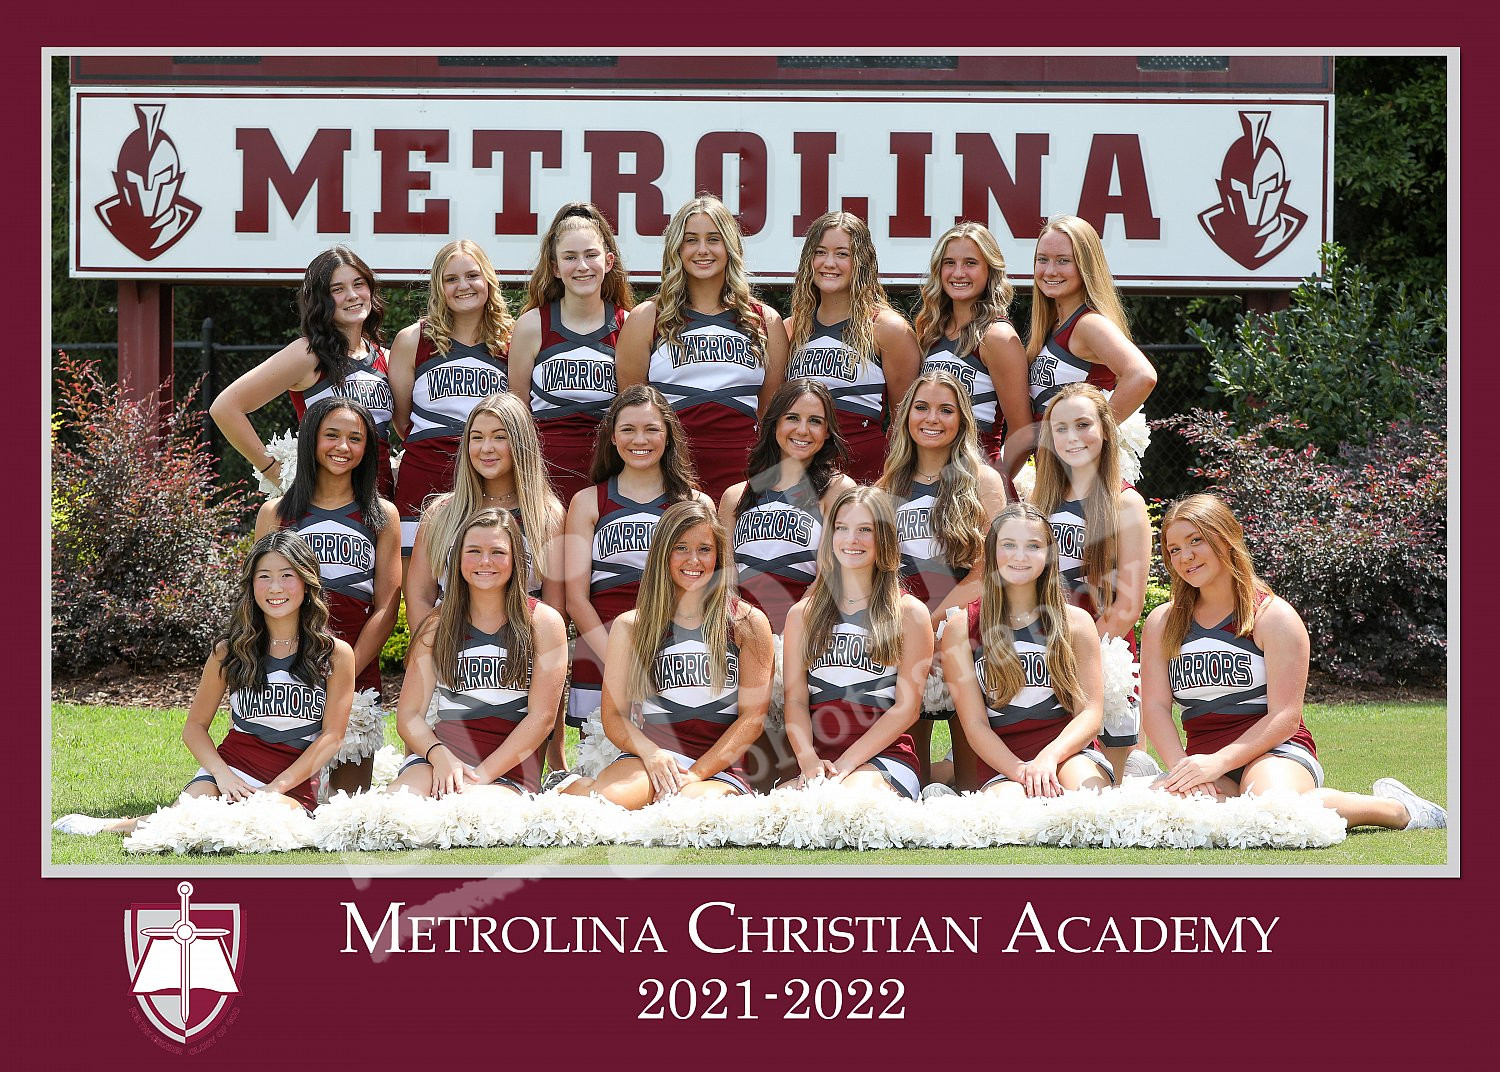 20212022 Metrolina Christian Academy Photo Search schools School